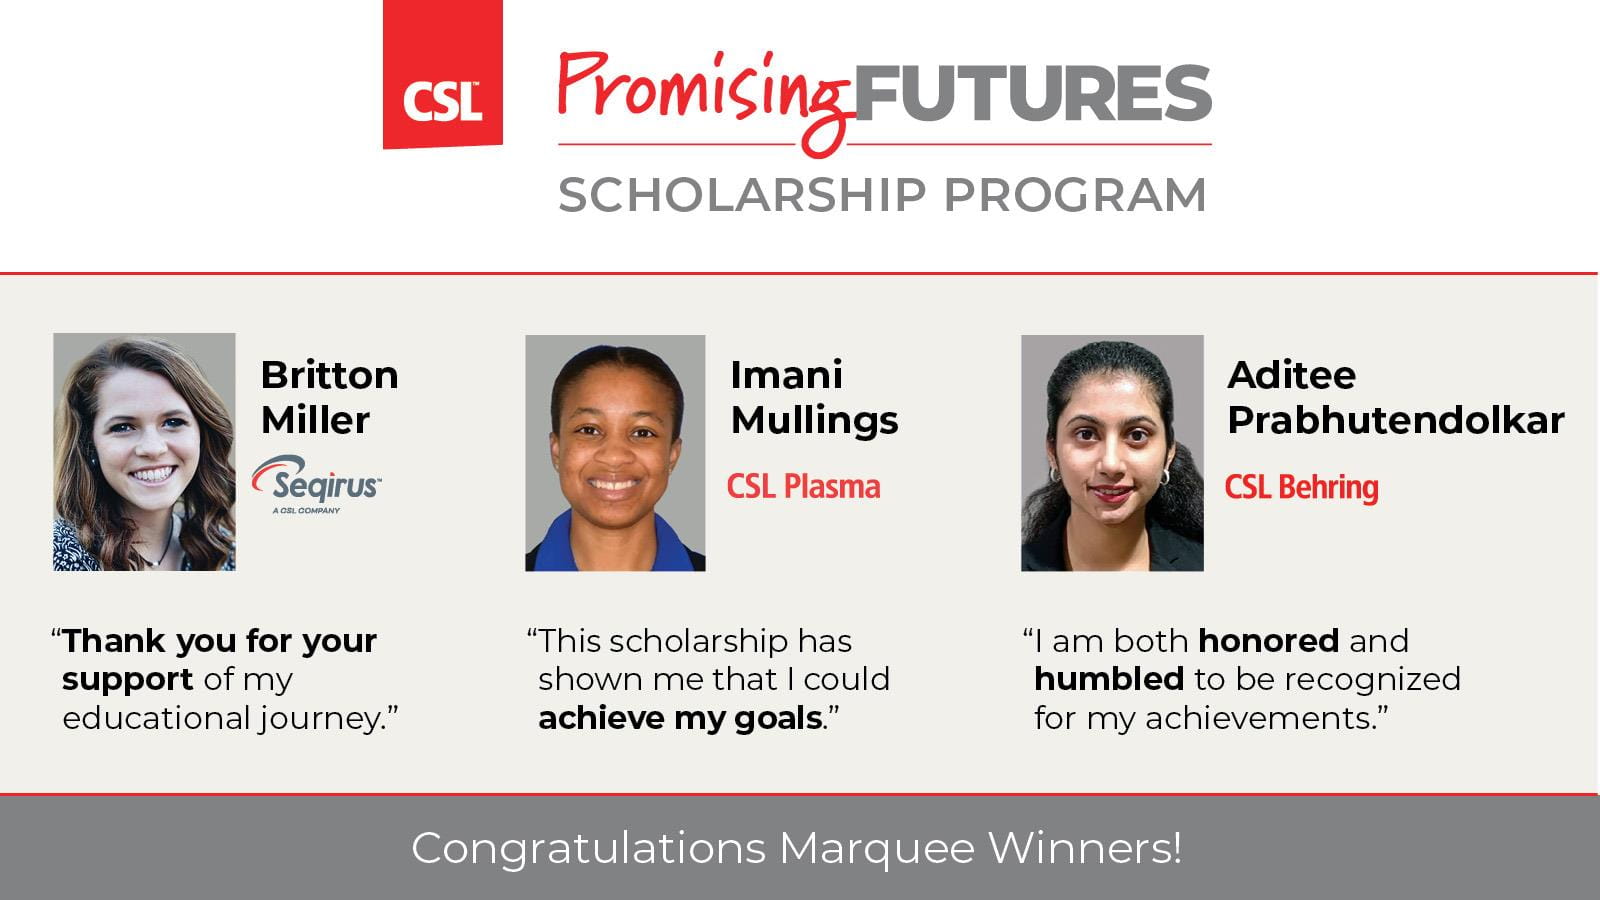 three marquee scholarship winners Britton Miller, Imani Mullings, Aditee Prabhutendolkar 